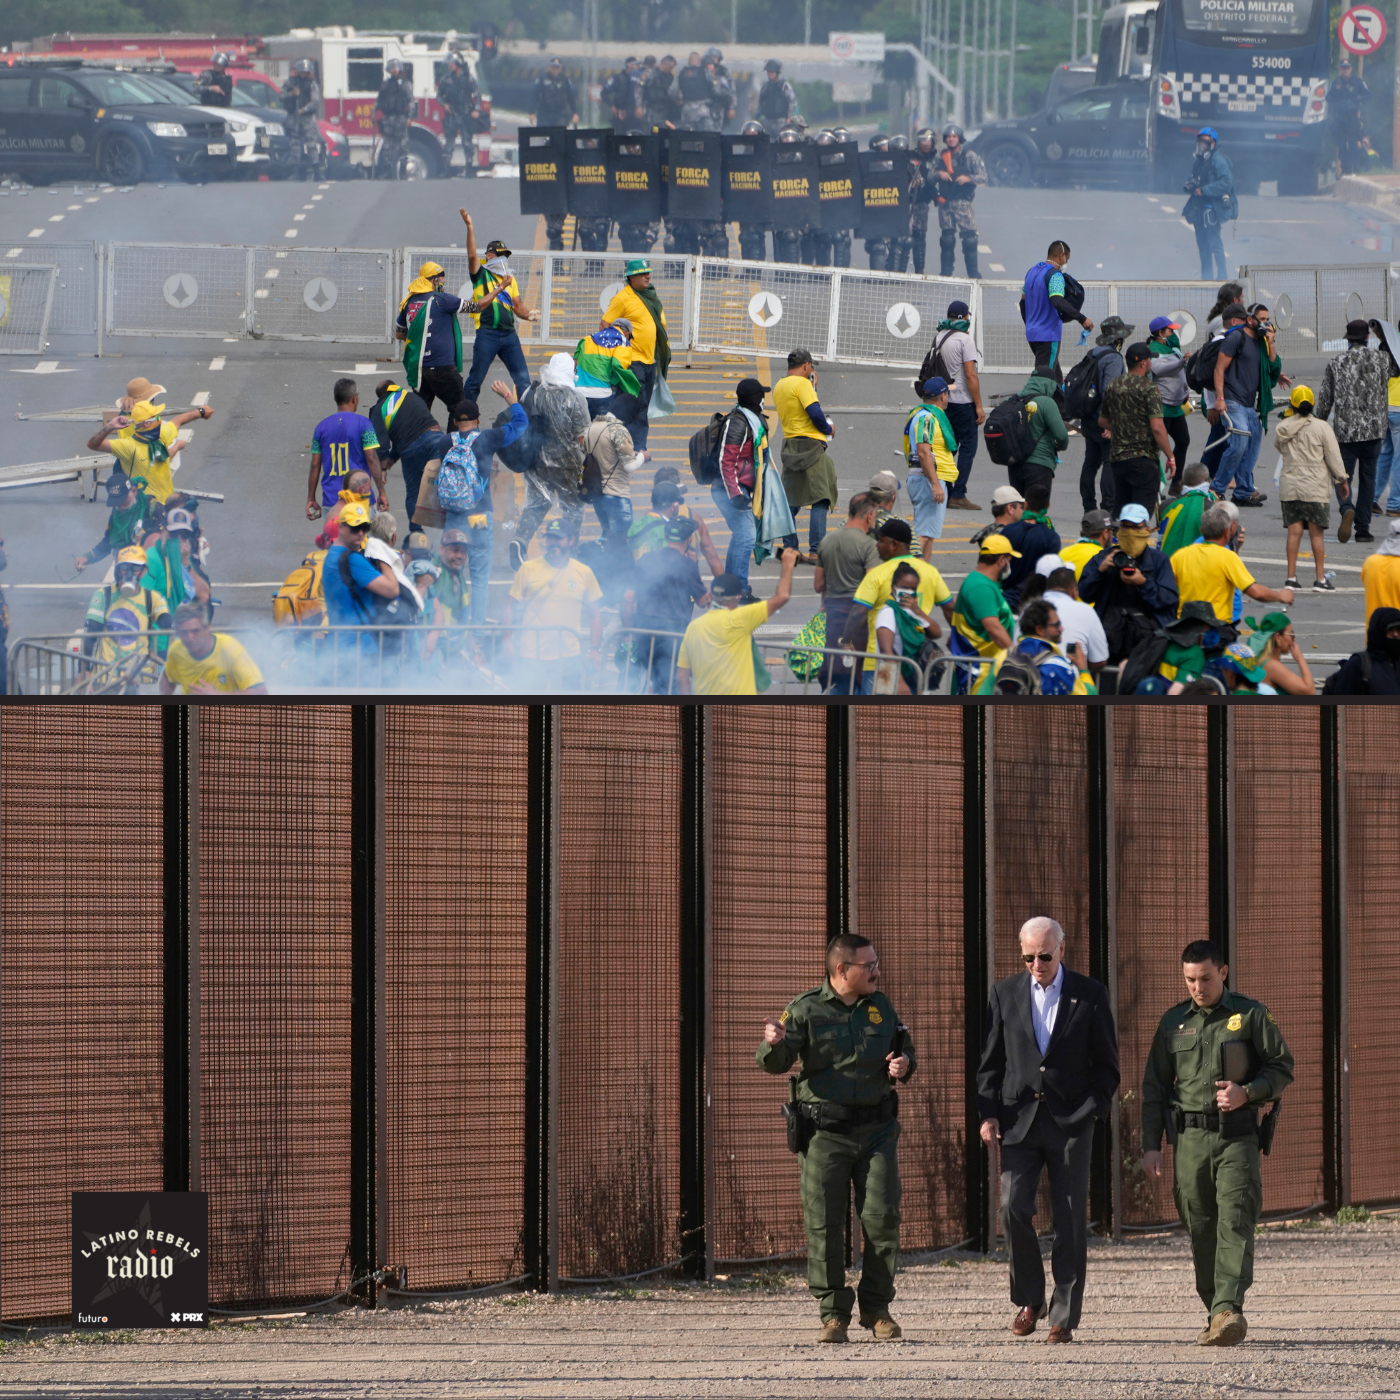 Brazil, Biden and the Border